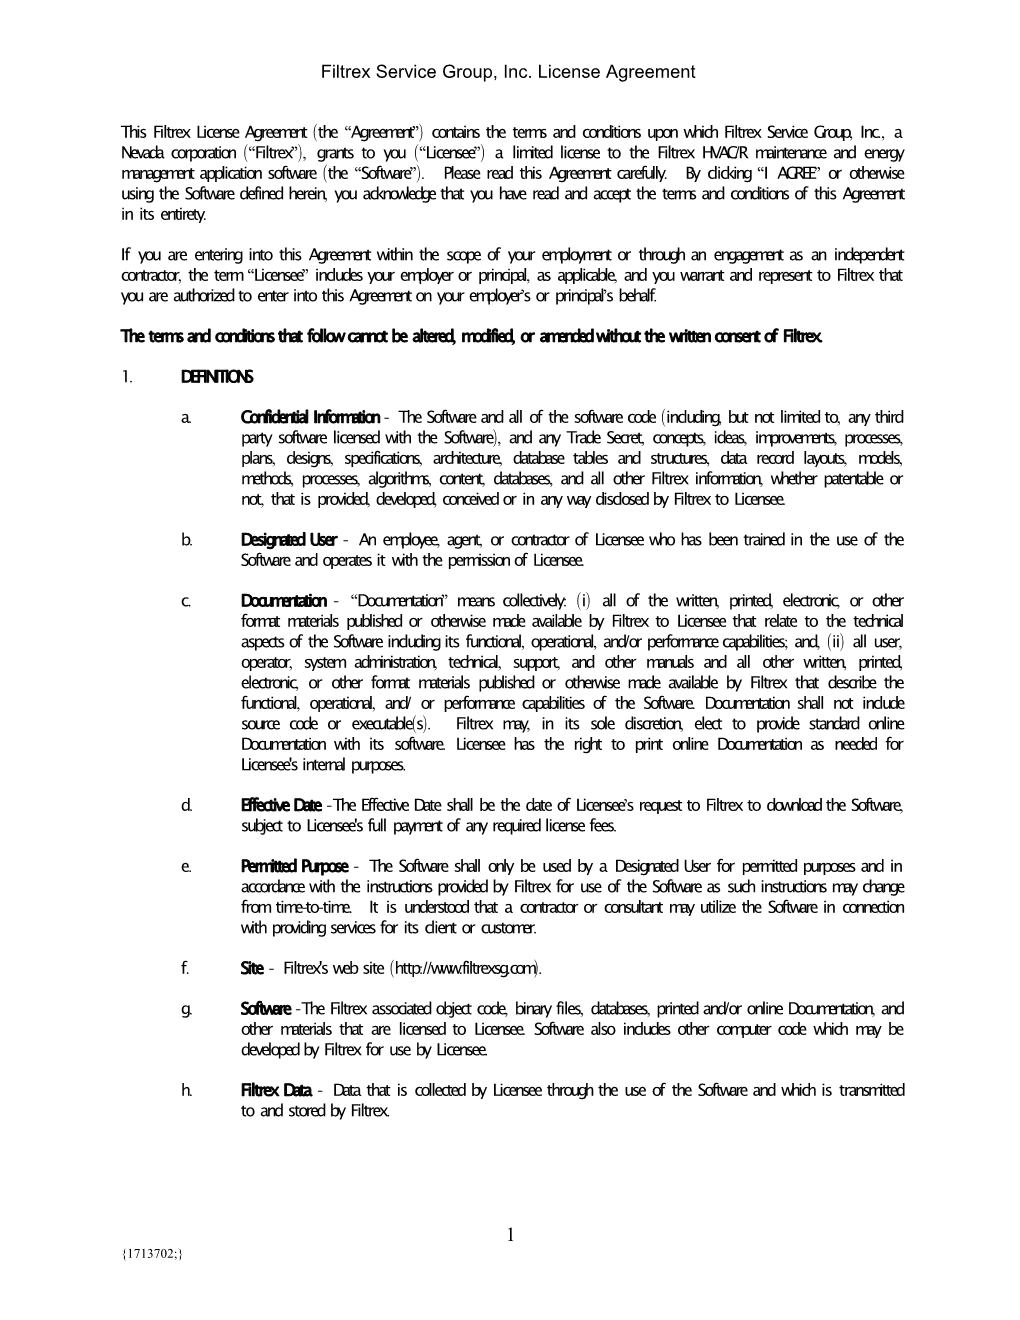 Filtrex End User License Agreement (1713702)